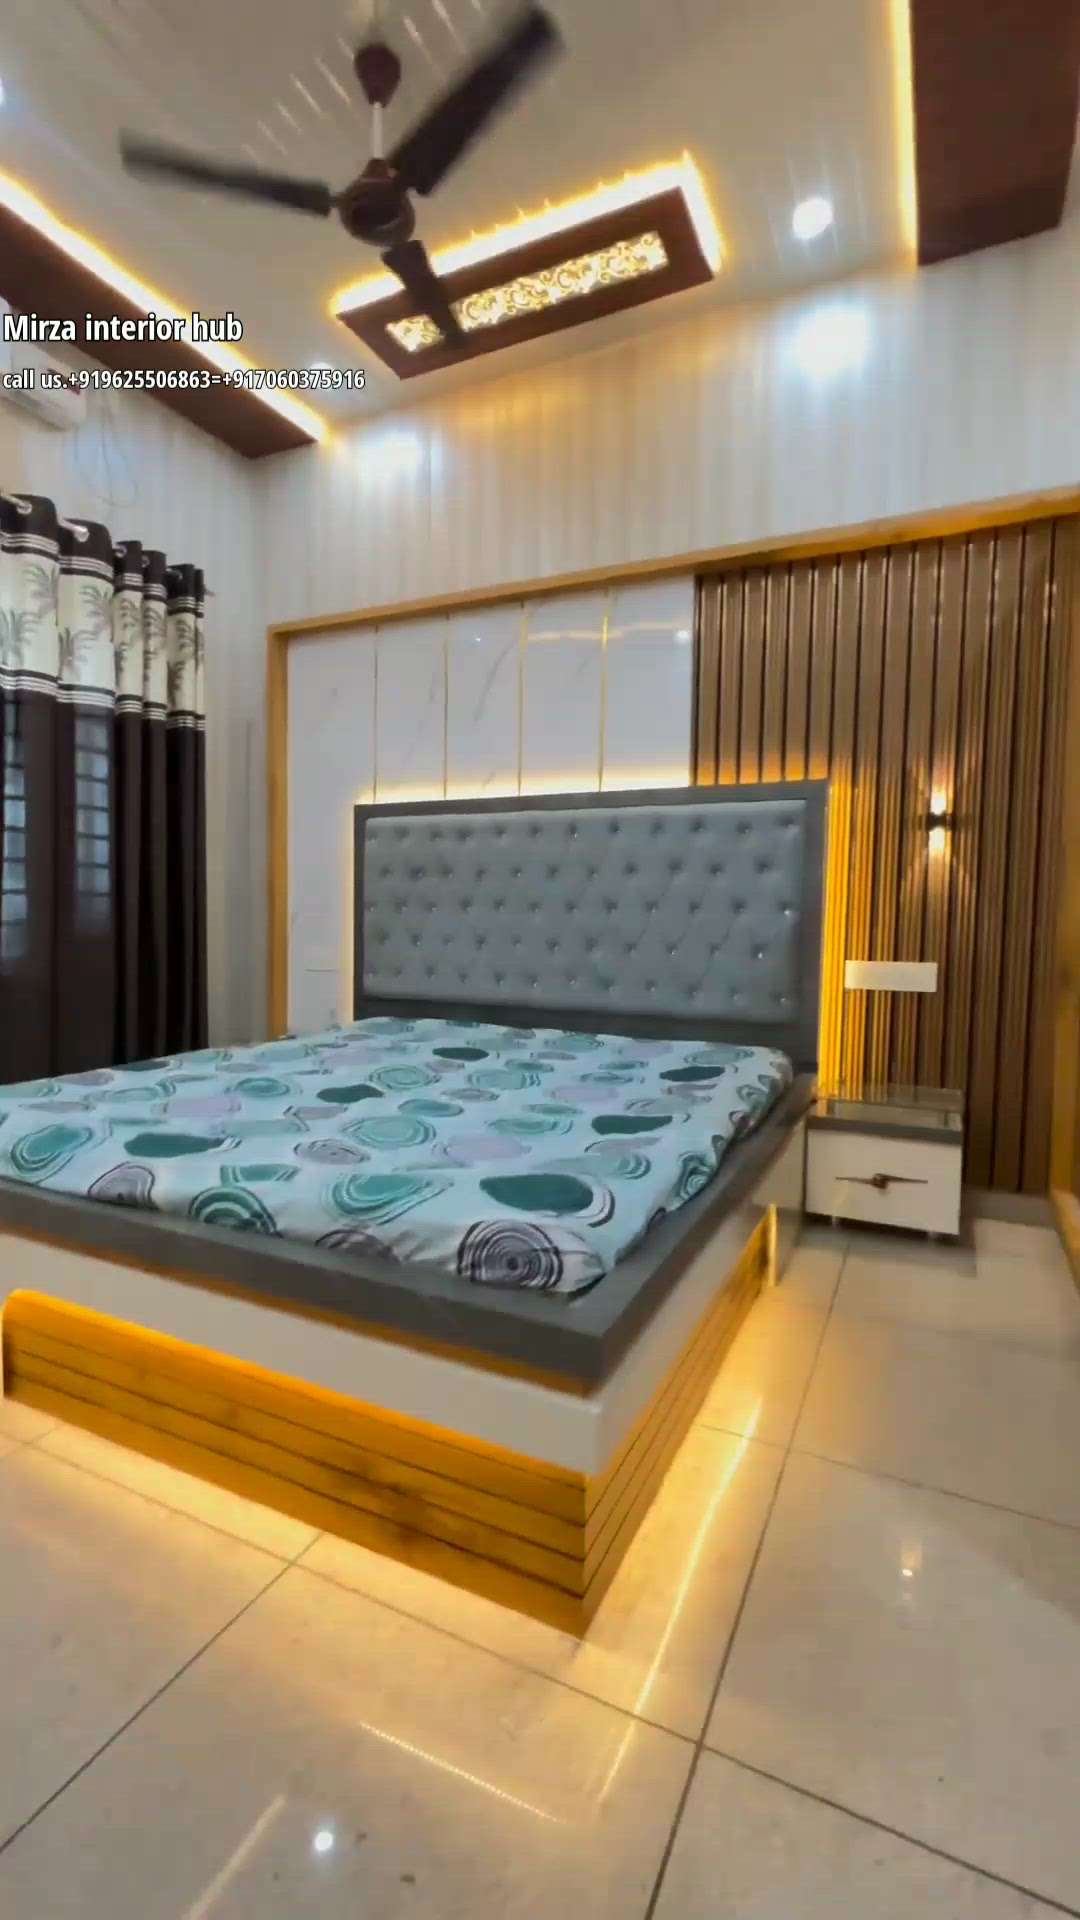 #BedroomDecor  #MasterBedroom  #ModularKitchen  #modularwardrobe  #Modularfurniture  #HomeDecor  #InteriorDesigner  #furniture  work karane ke liye contact kare whats.+919625806863
call+917060375916 Saquib Mirza